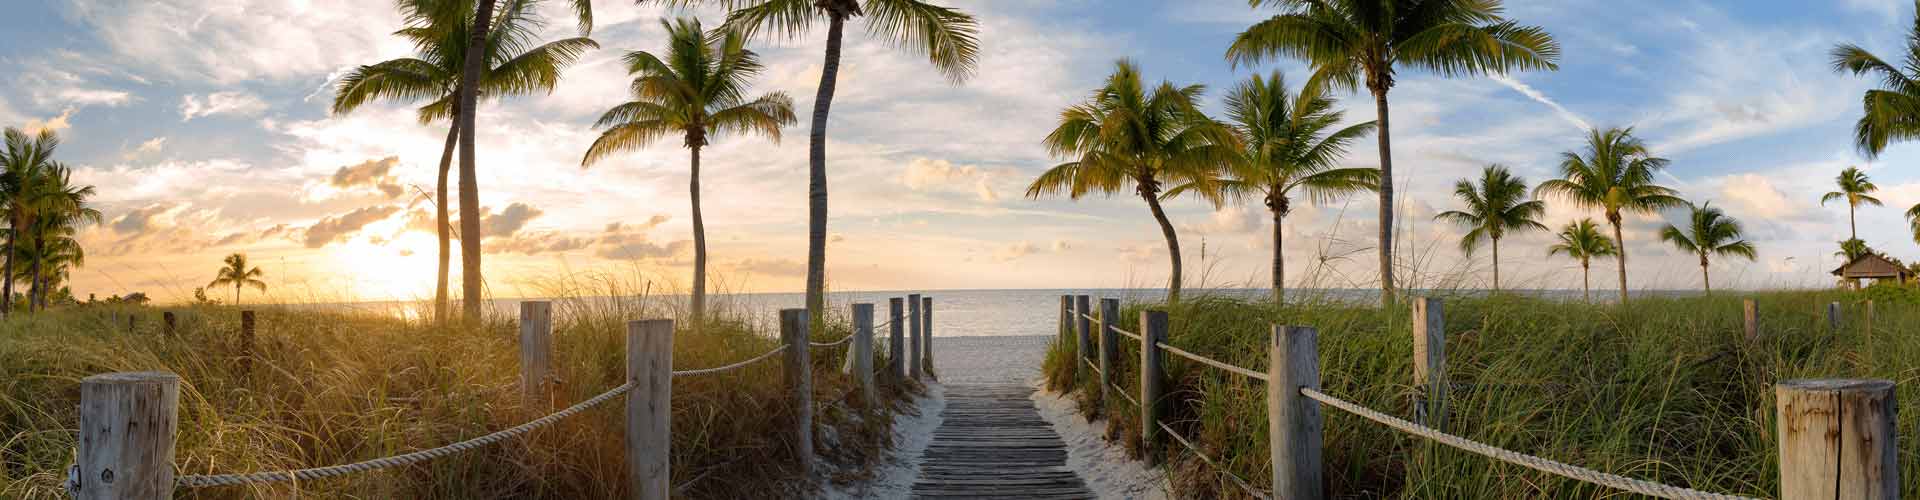 Sunny Isles Beach (zip 33160), FL